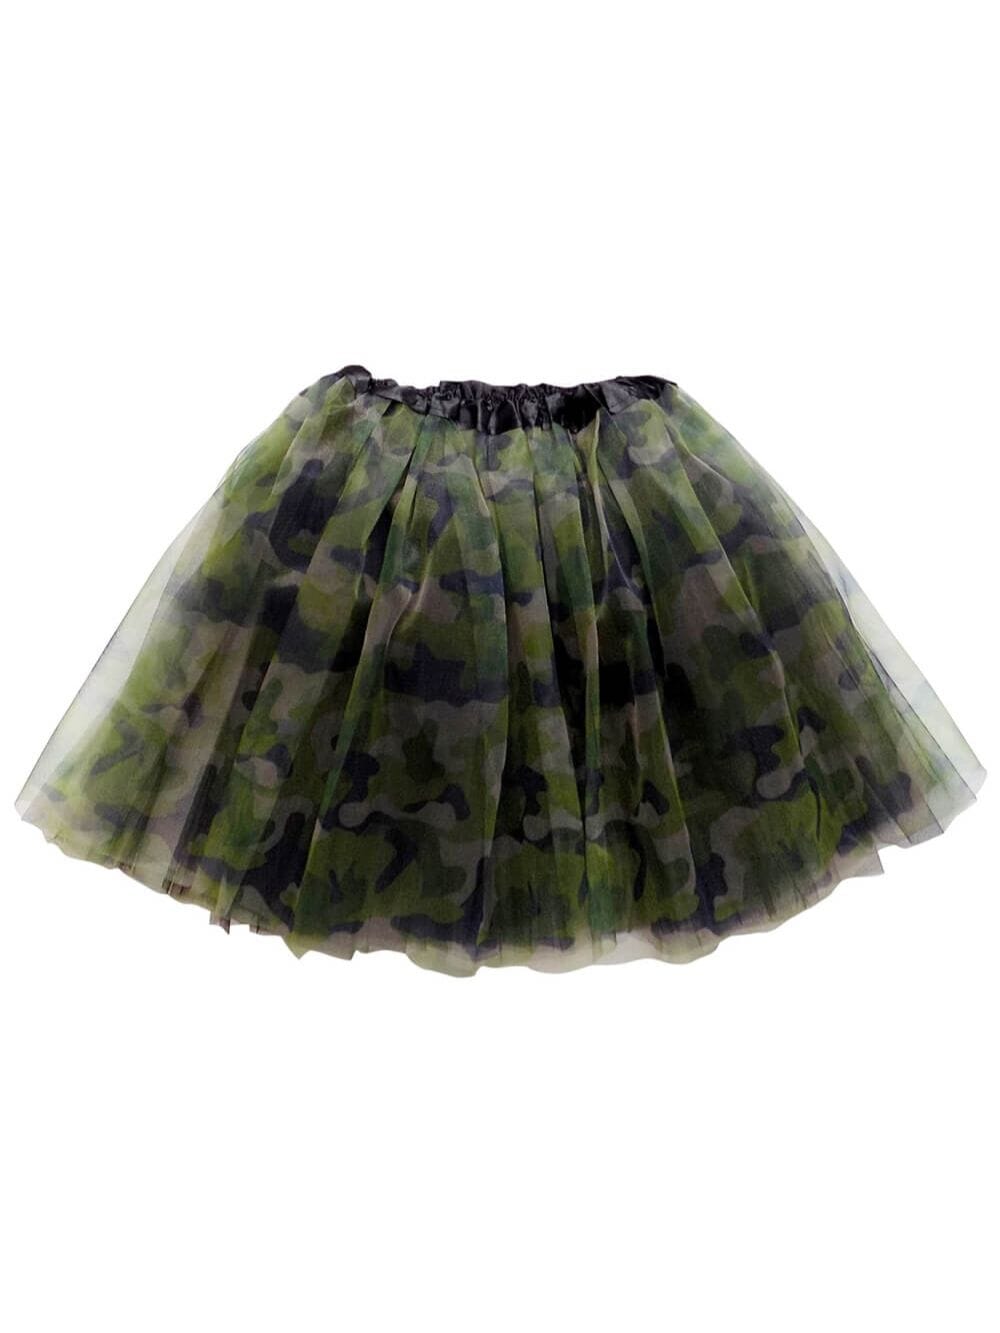 Green Camo Adult Tutu Skirt - Women's Size 3-Layer Basic Ballet Costume Dance Tutus - Sydney So Sweet